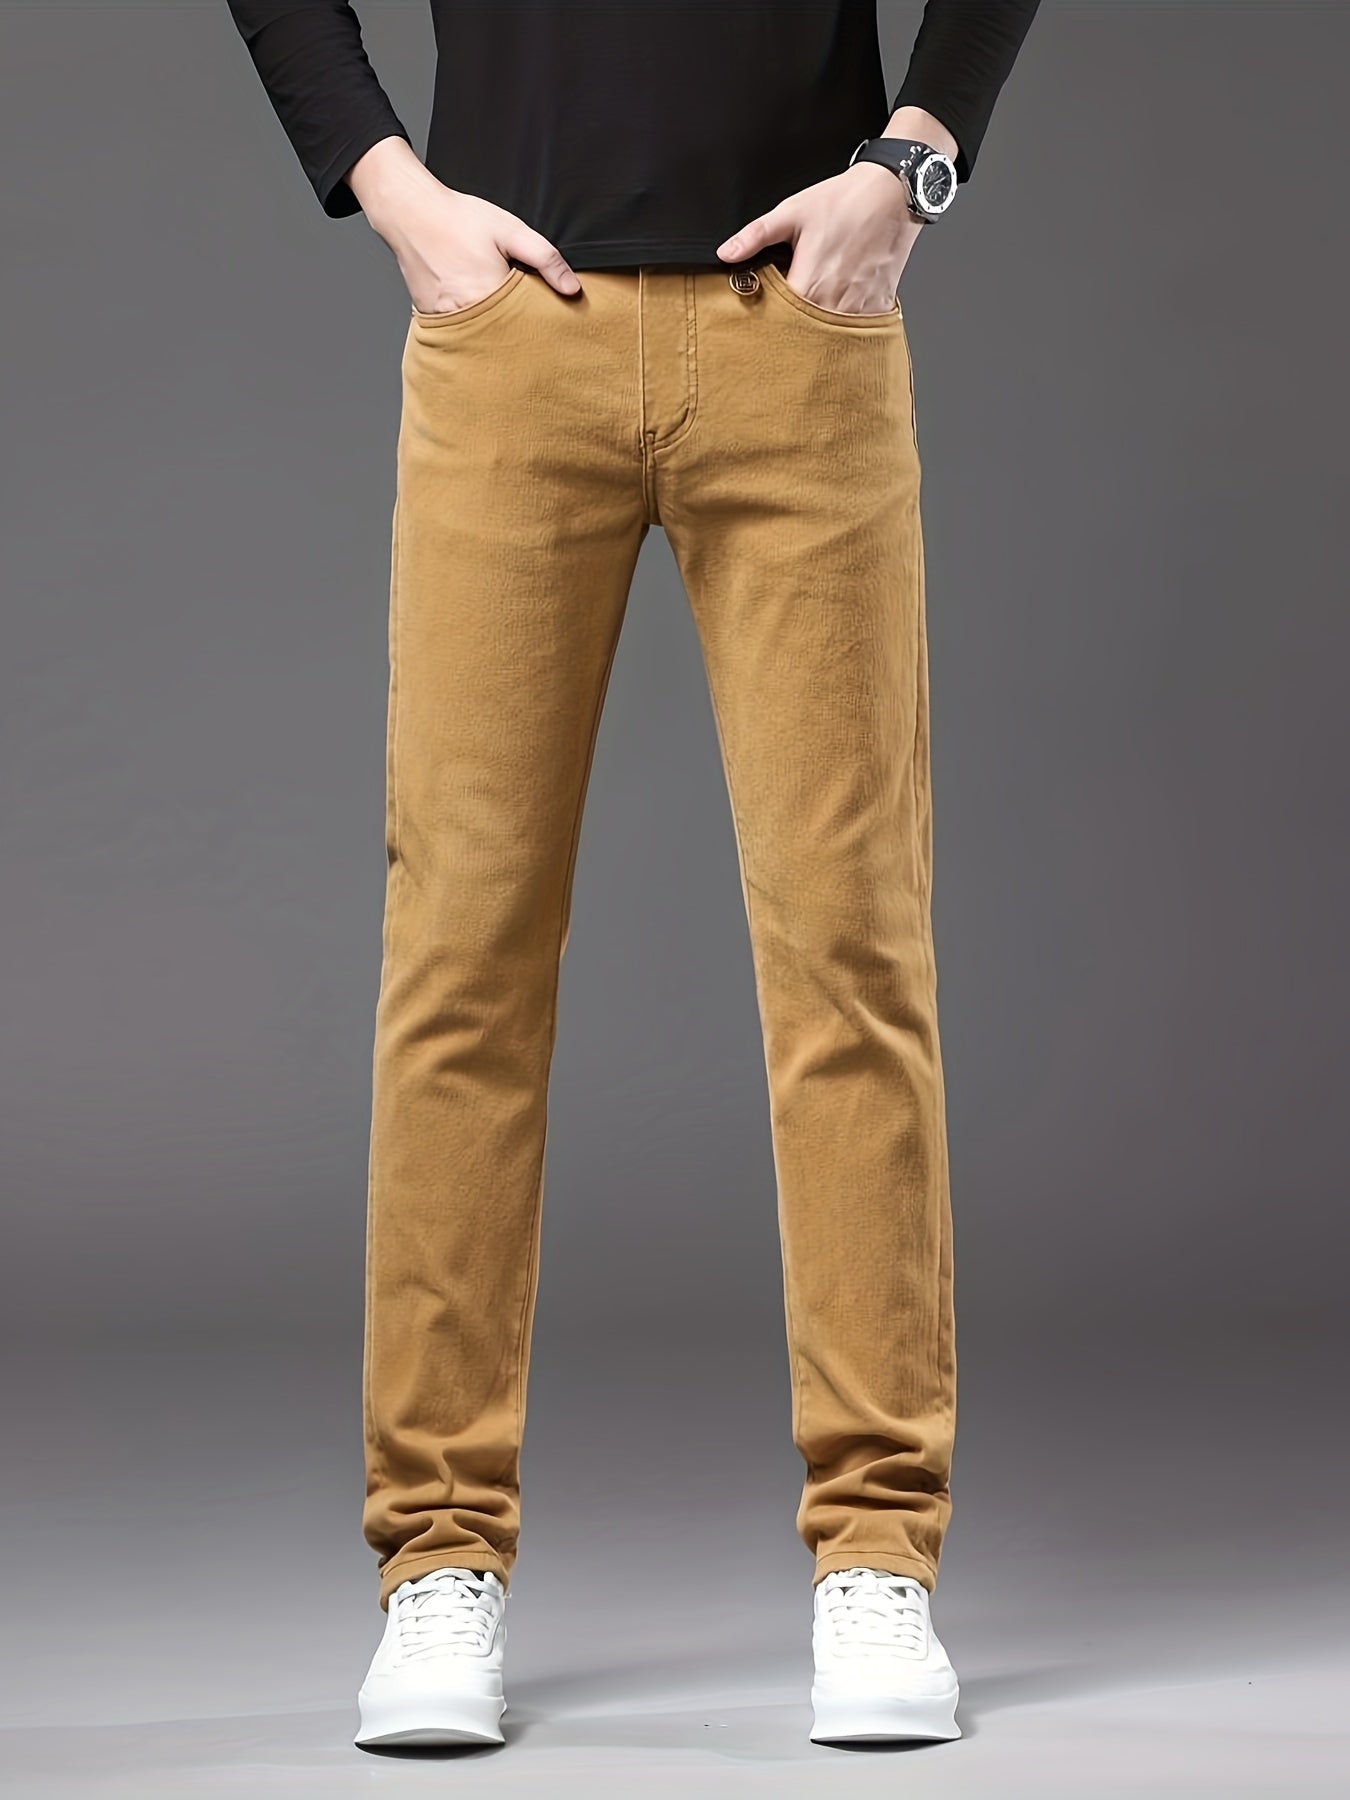 Men's Retro Semi-formal Jeans, Chic Classic Design Denim Pants For Business